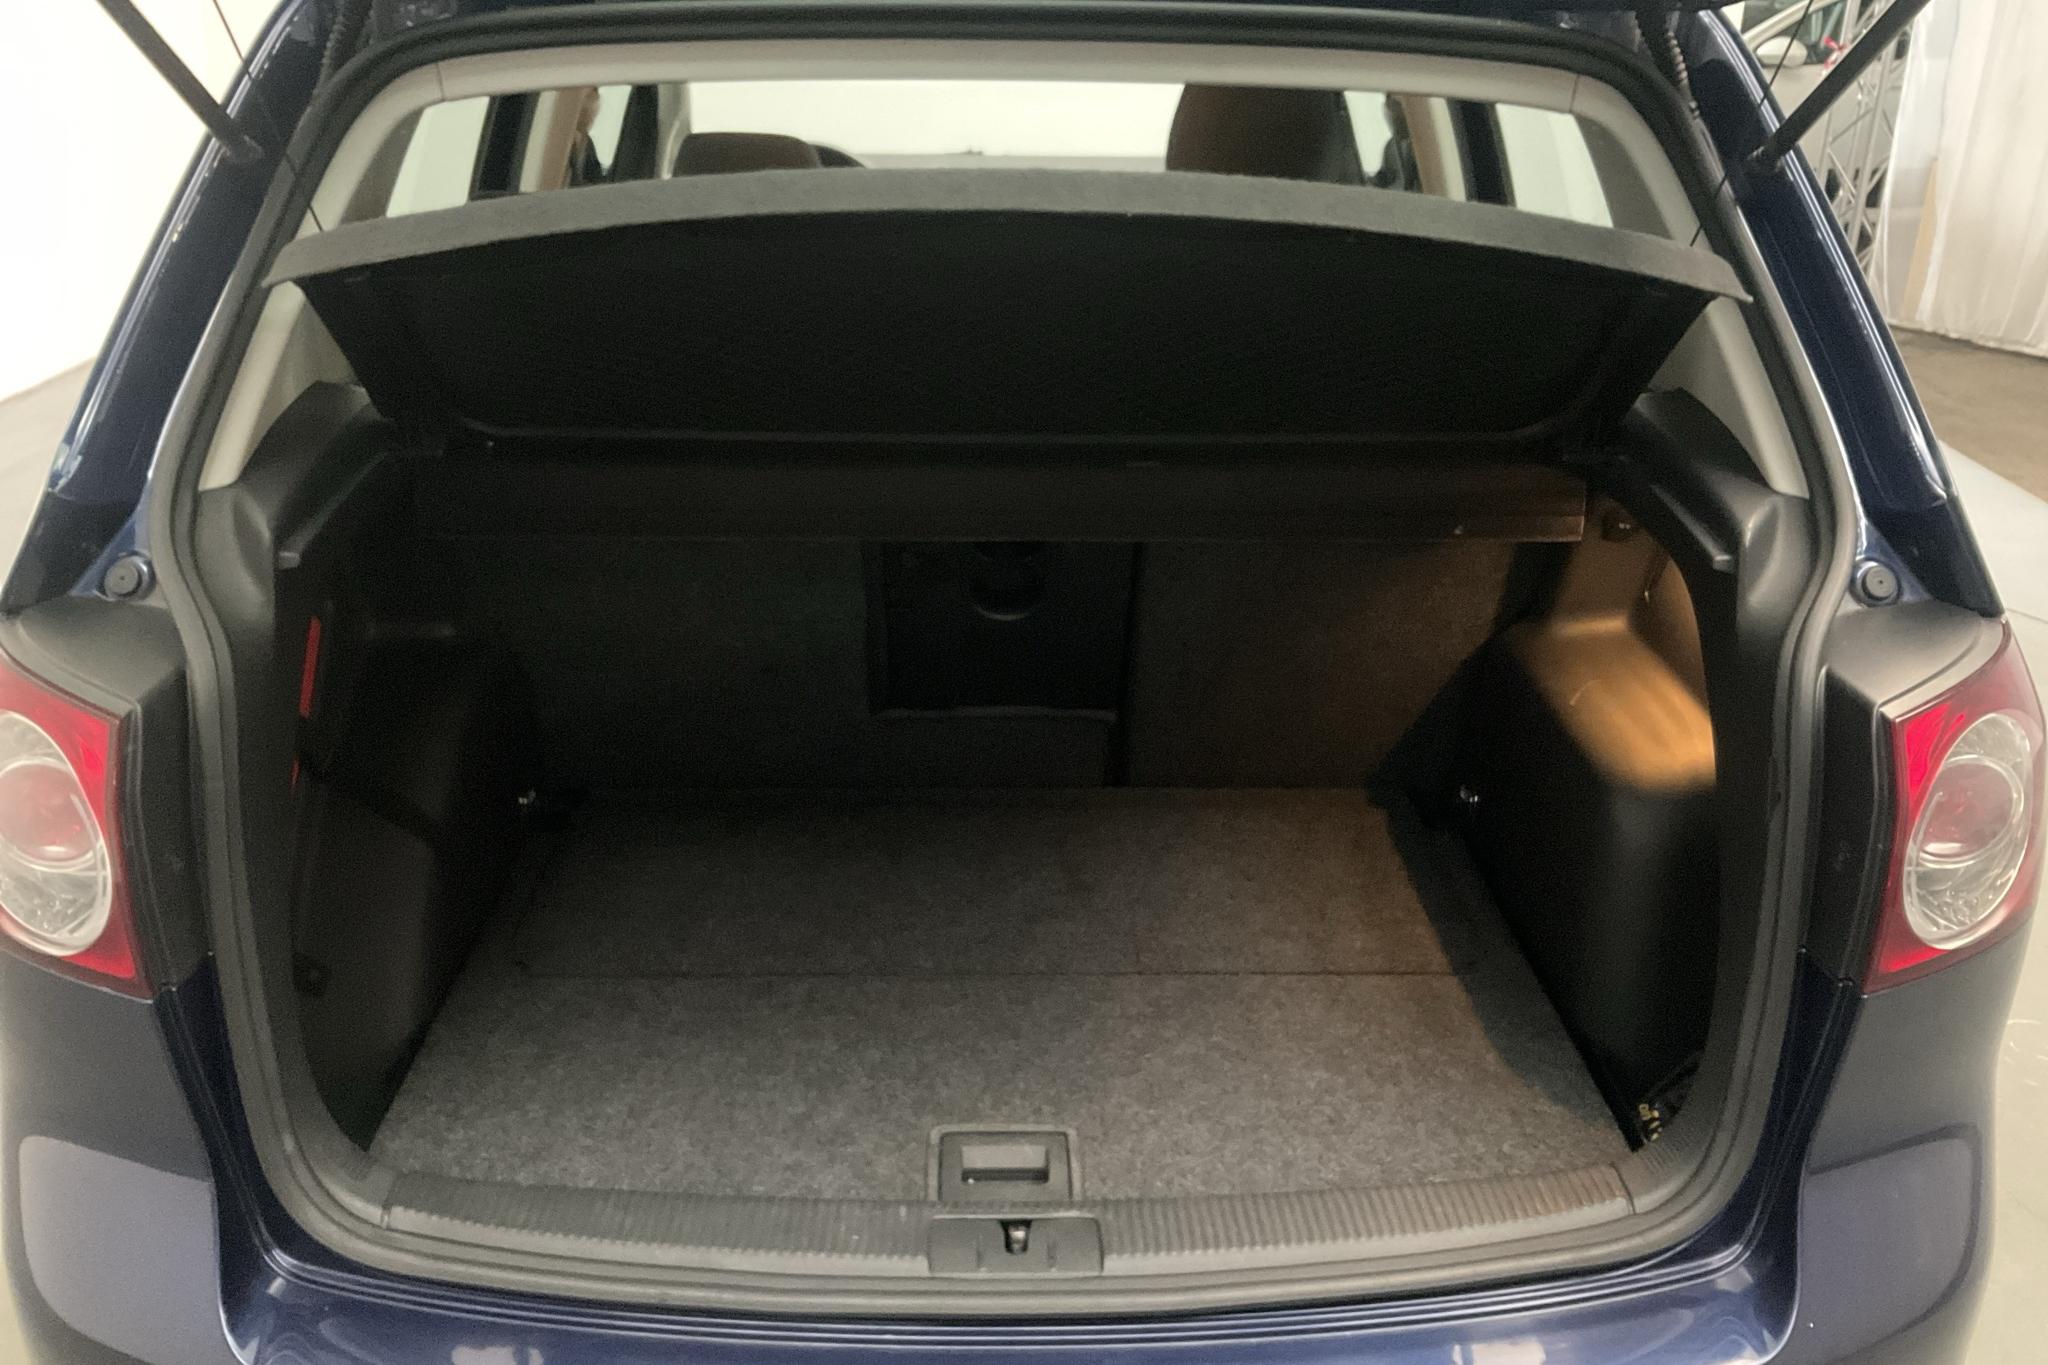 VW Golf VI 1.4 TSI Plus (122hk) - 155 400 km - Manual - Dark Blue - 2011